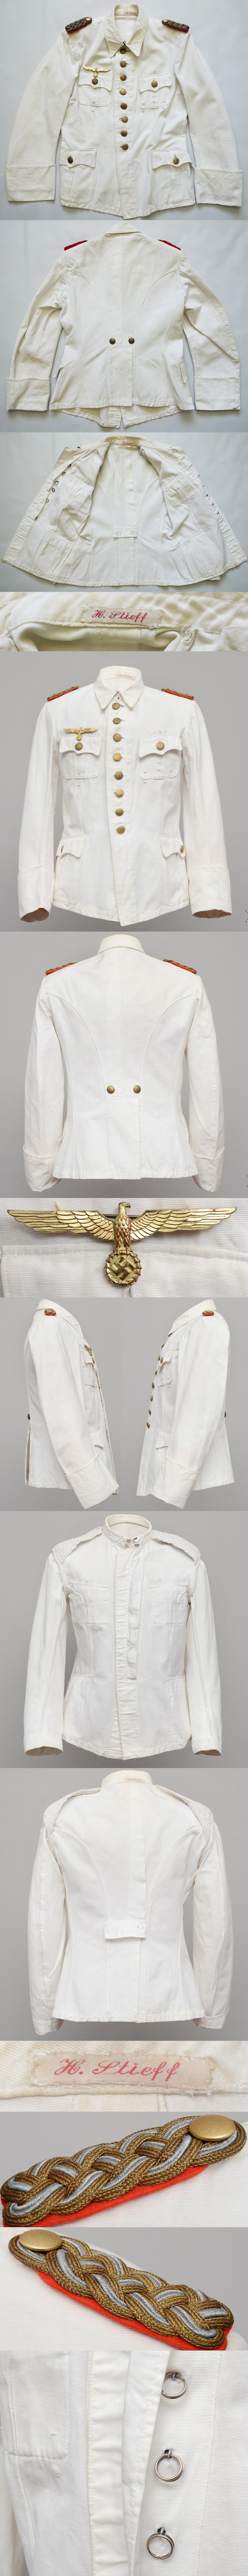 Army White Summer Tunic of Generalmajor Hellmuth Stieff